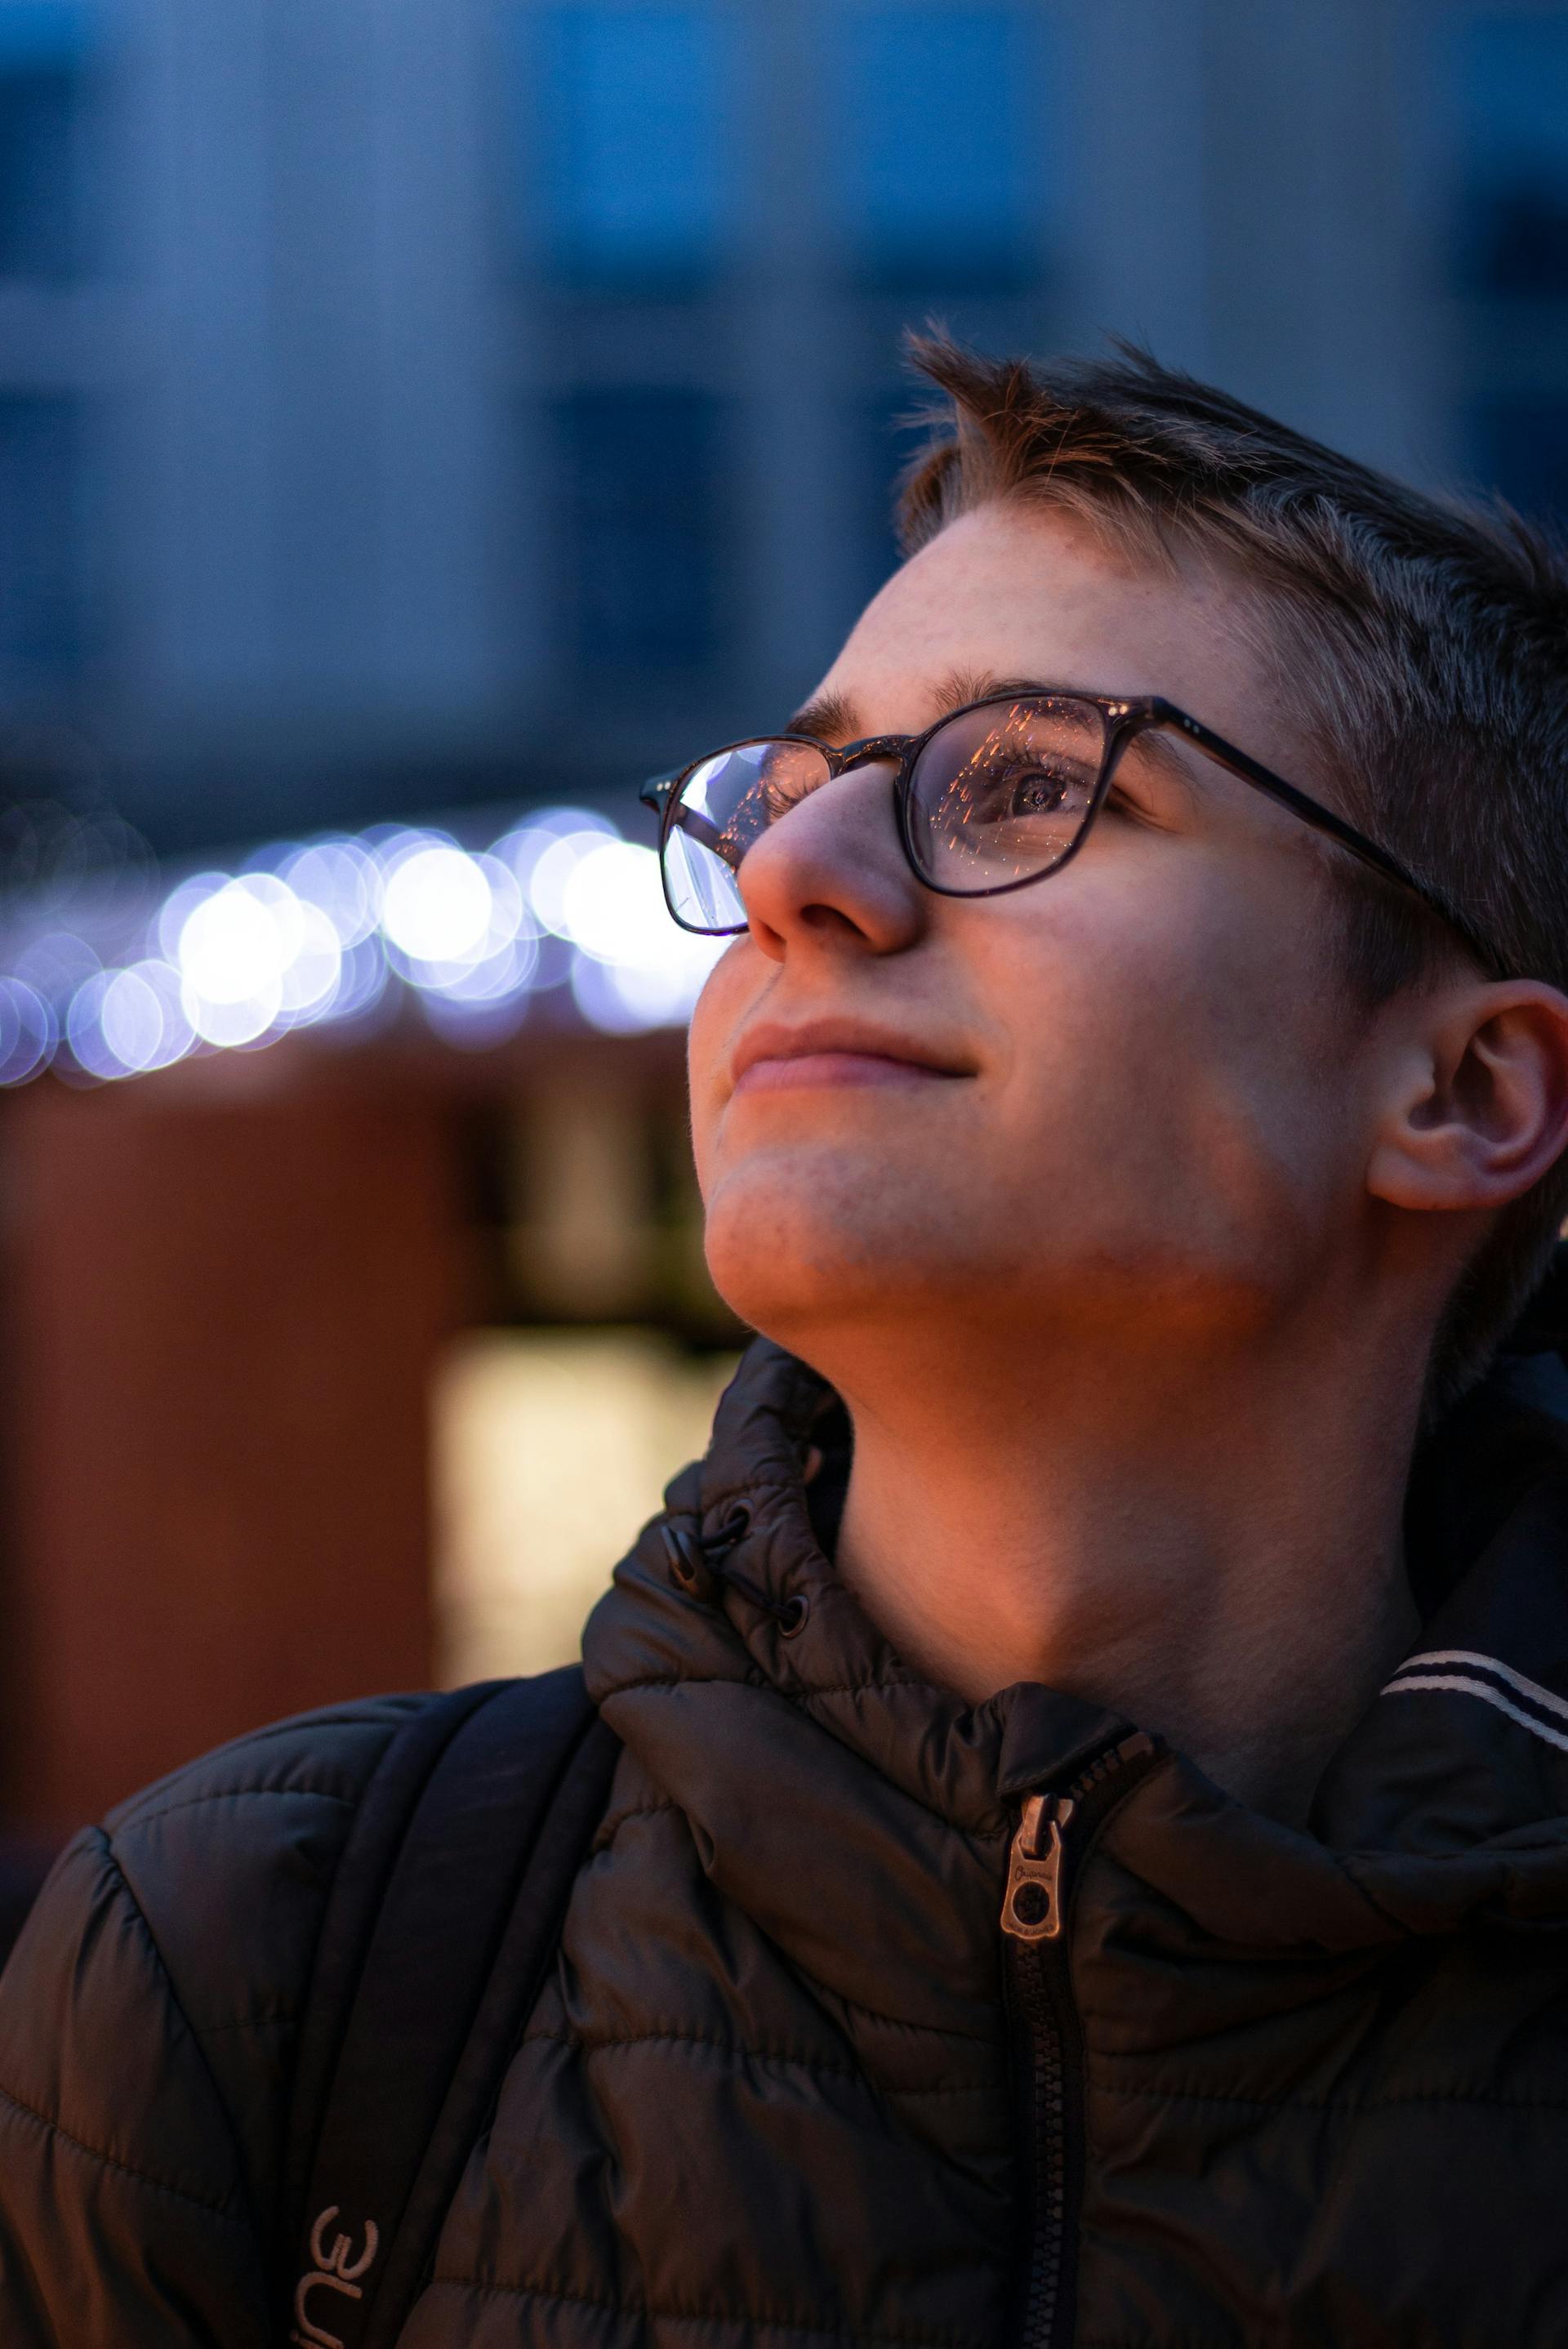 A smiling teenage boy wearing a jacket and eyeglasses | Source: Pexels